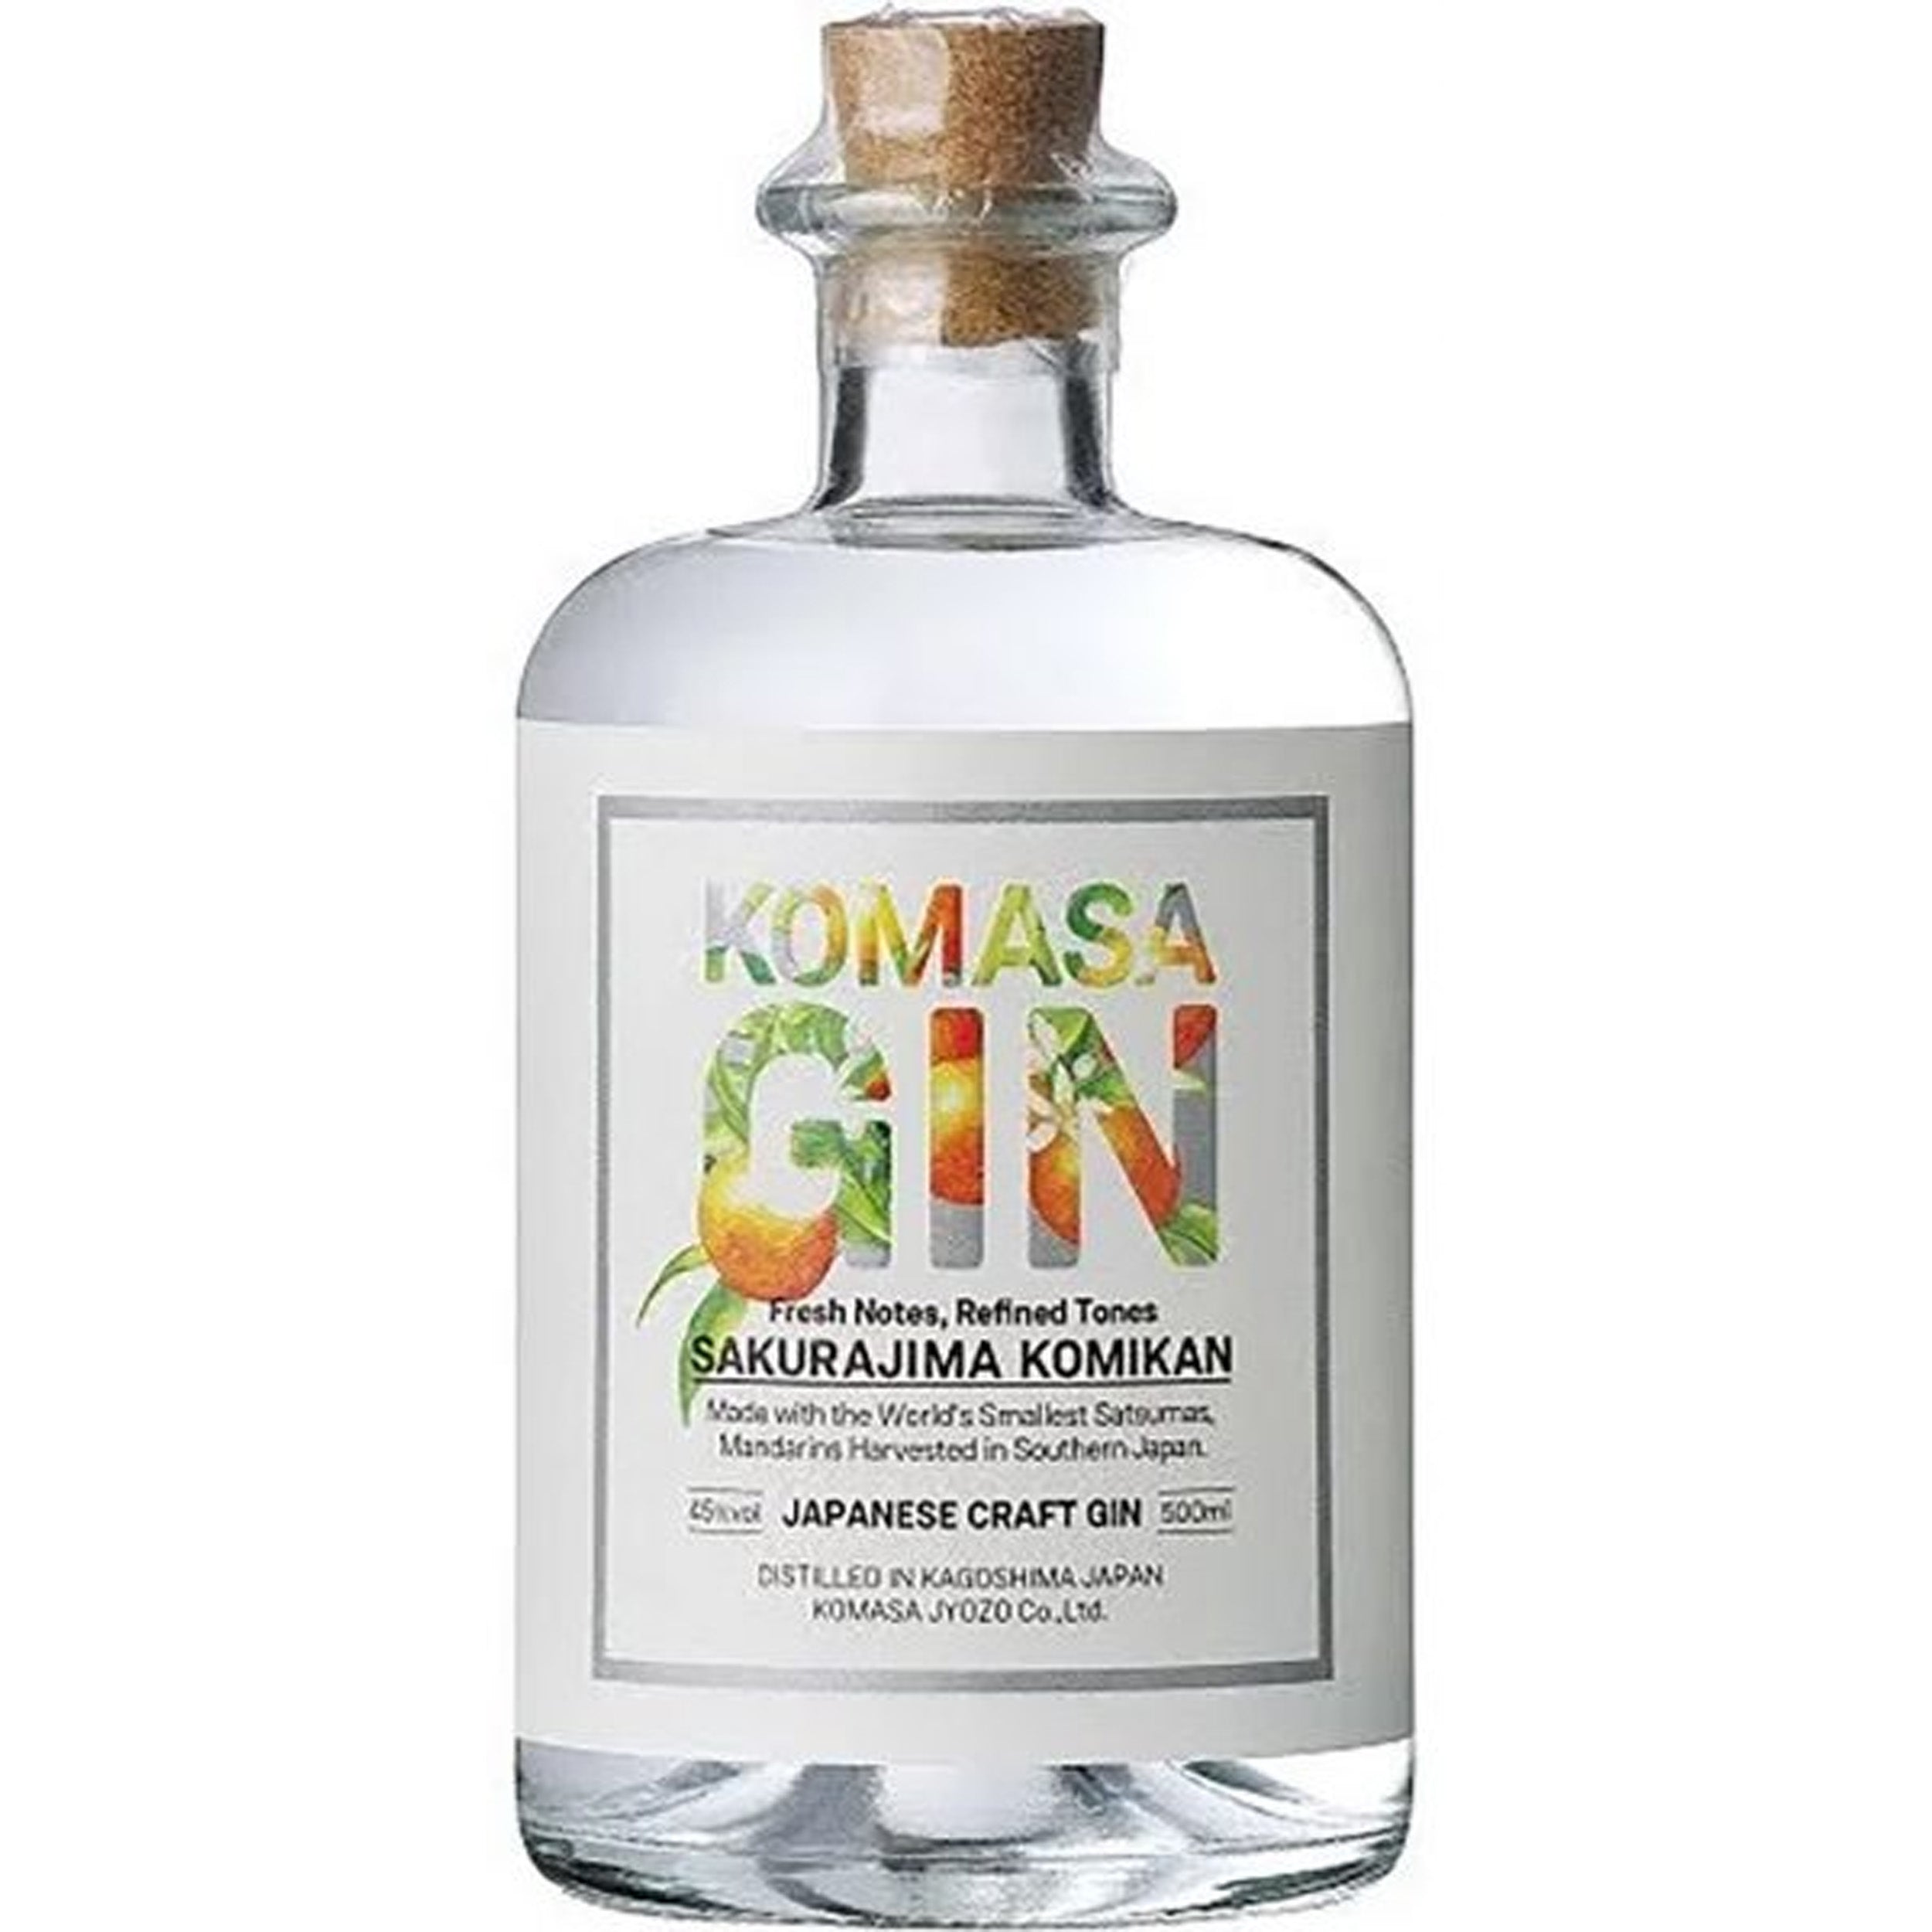 Komasa Sakurajima Komikan Japanese Craft Gin